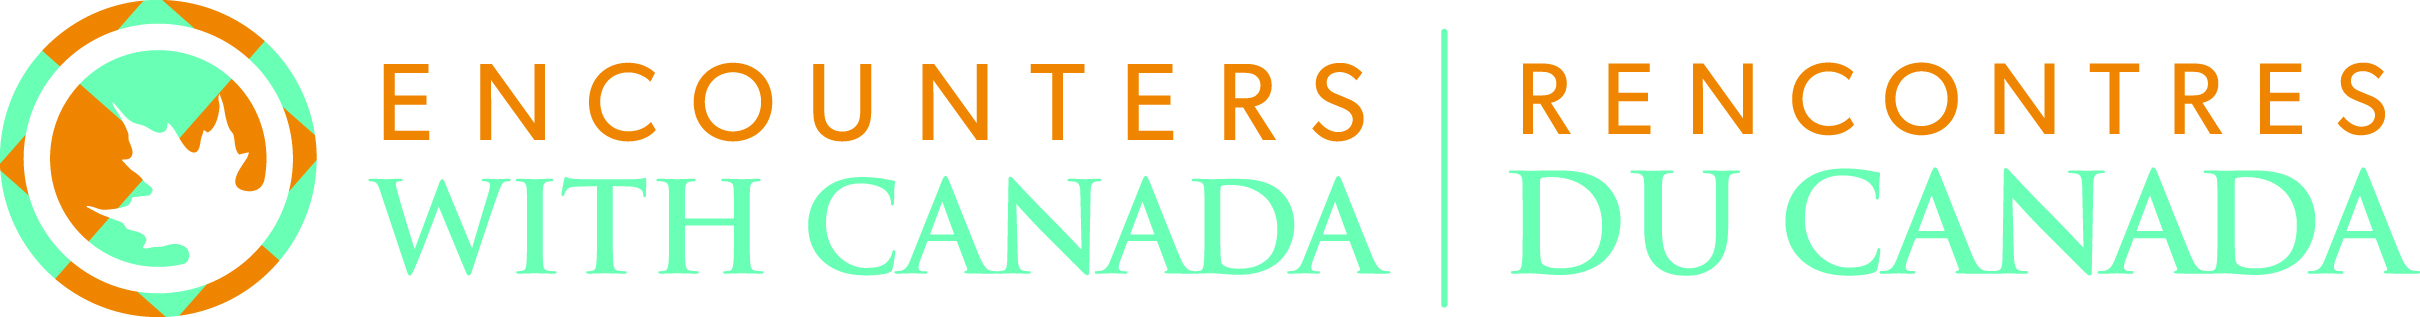 encounters with canada logo